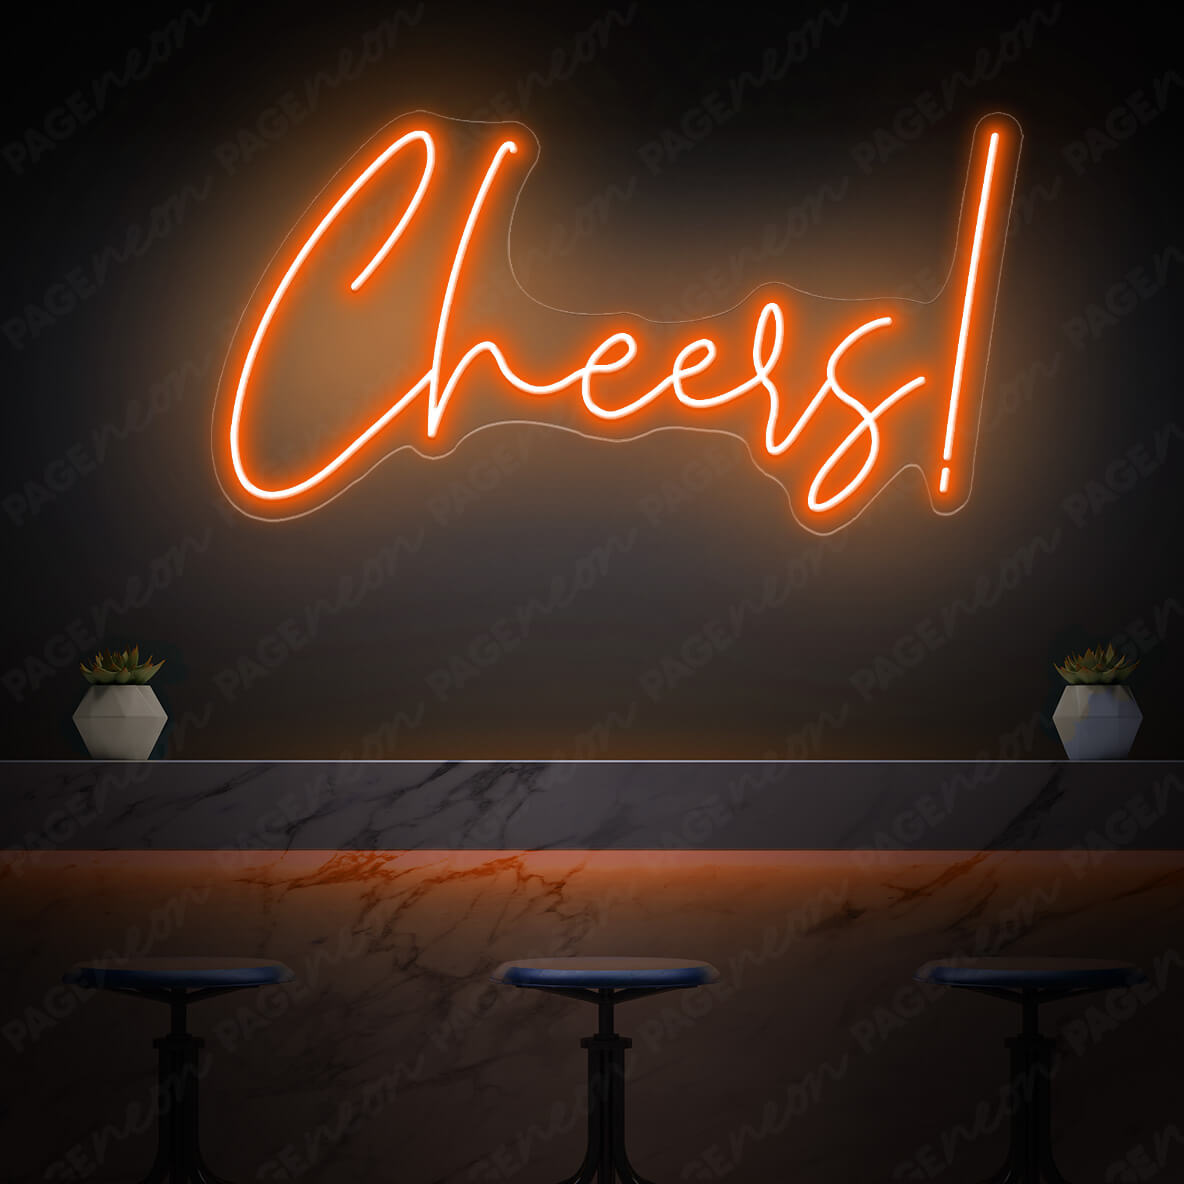 Cheers Neon Sign Bar Led Light Orange